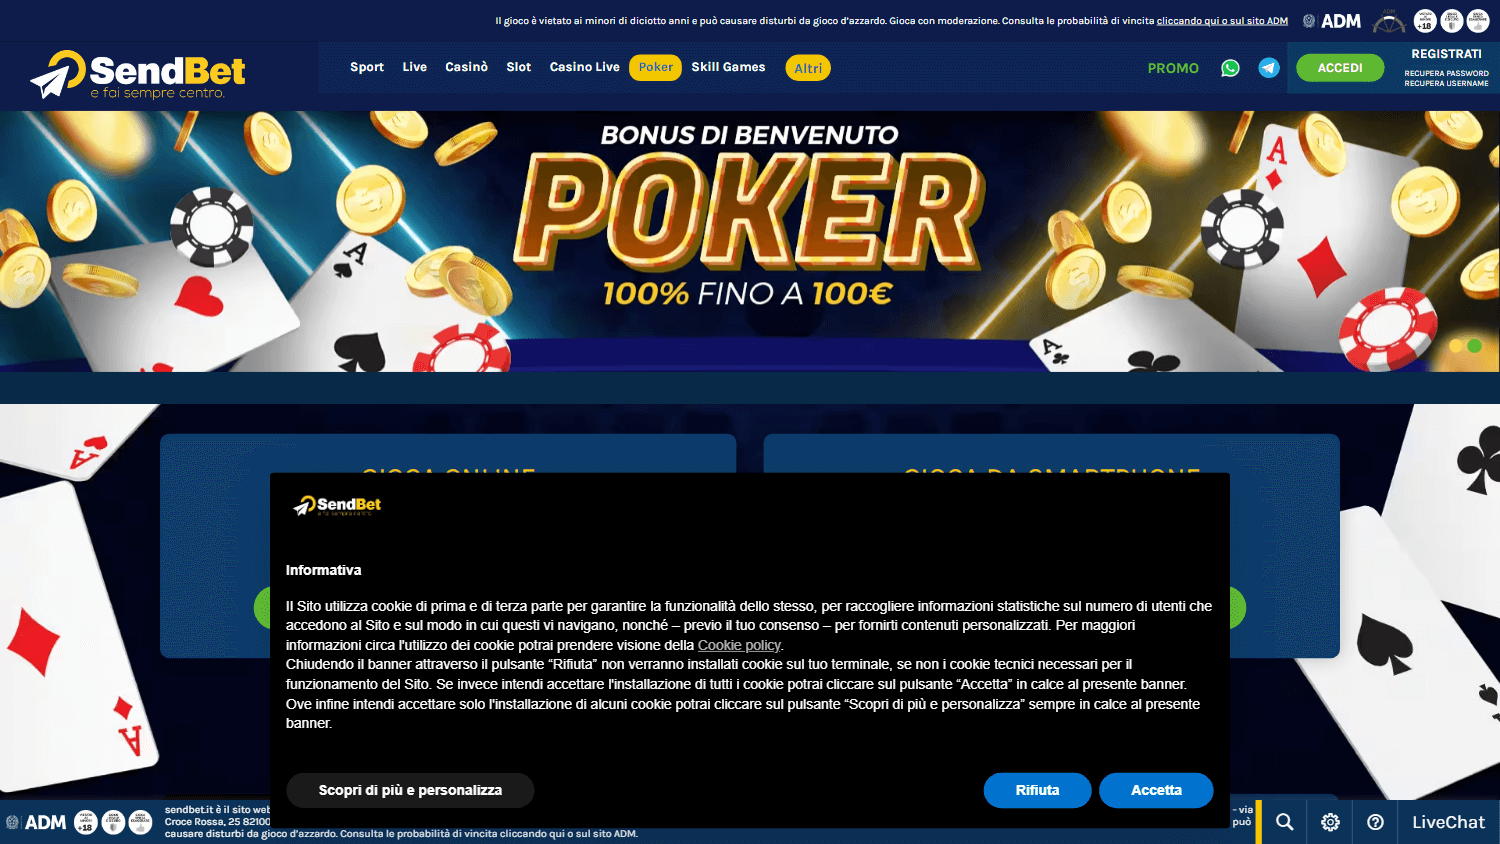 sendbet_casino_homepage_desktop